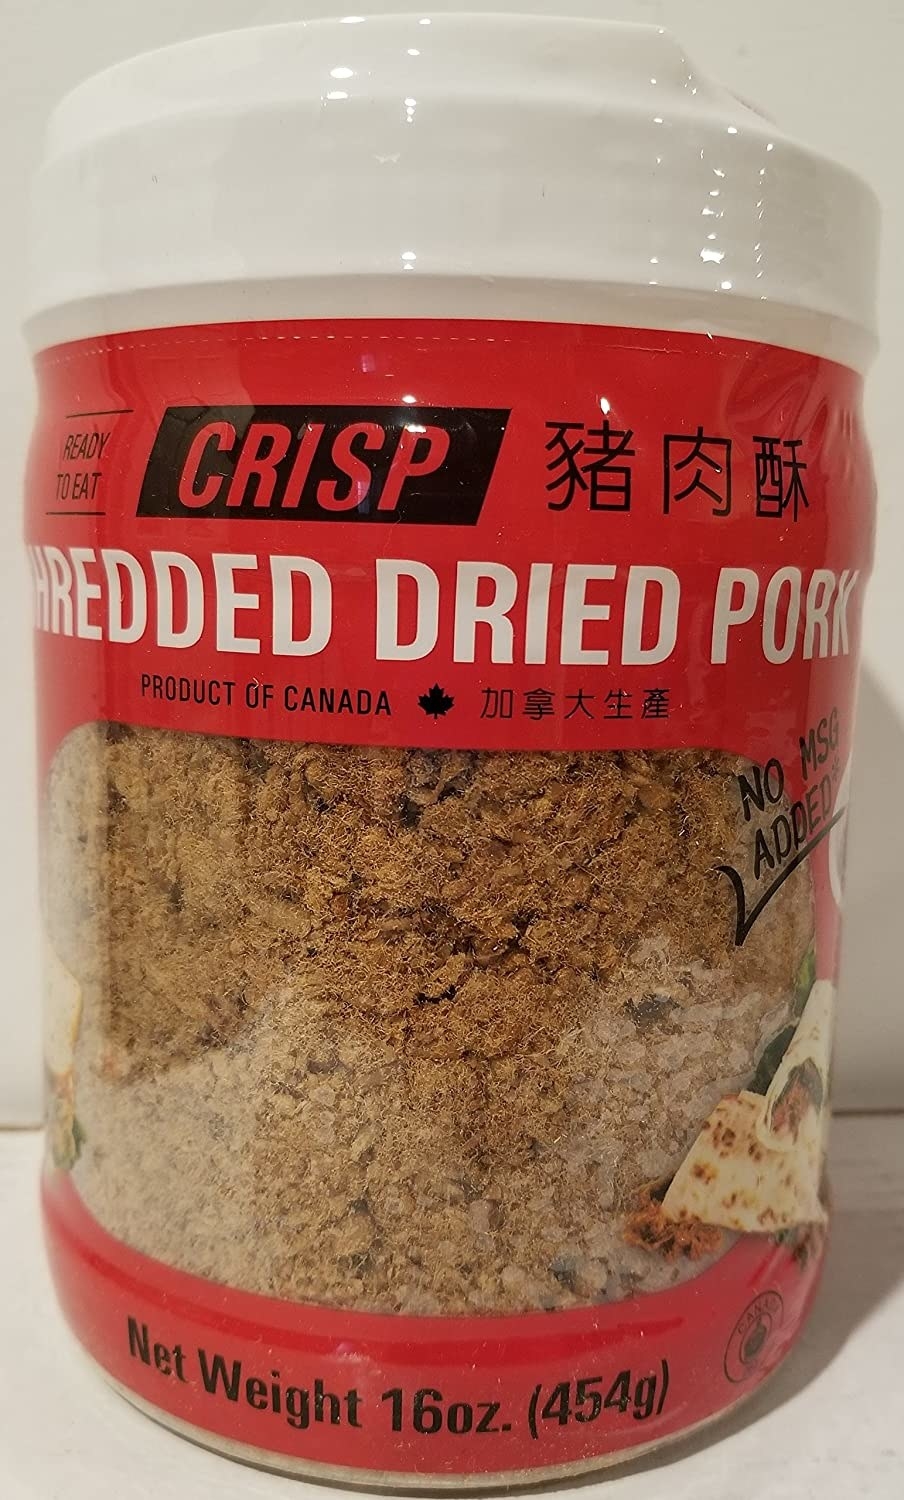 Shredded Dried Pork